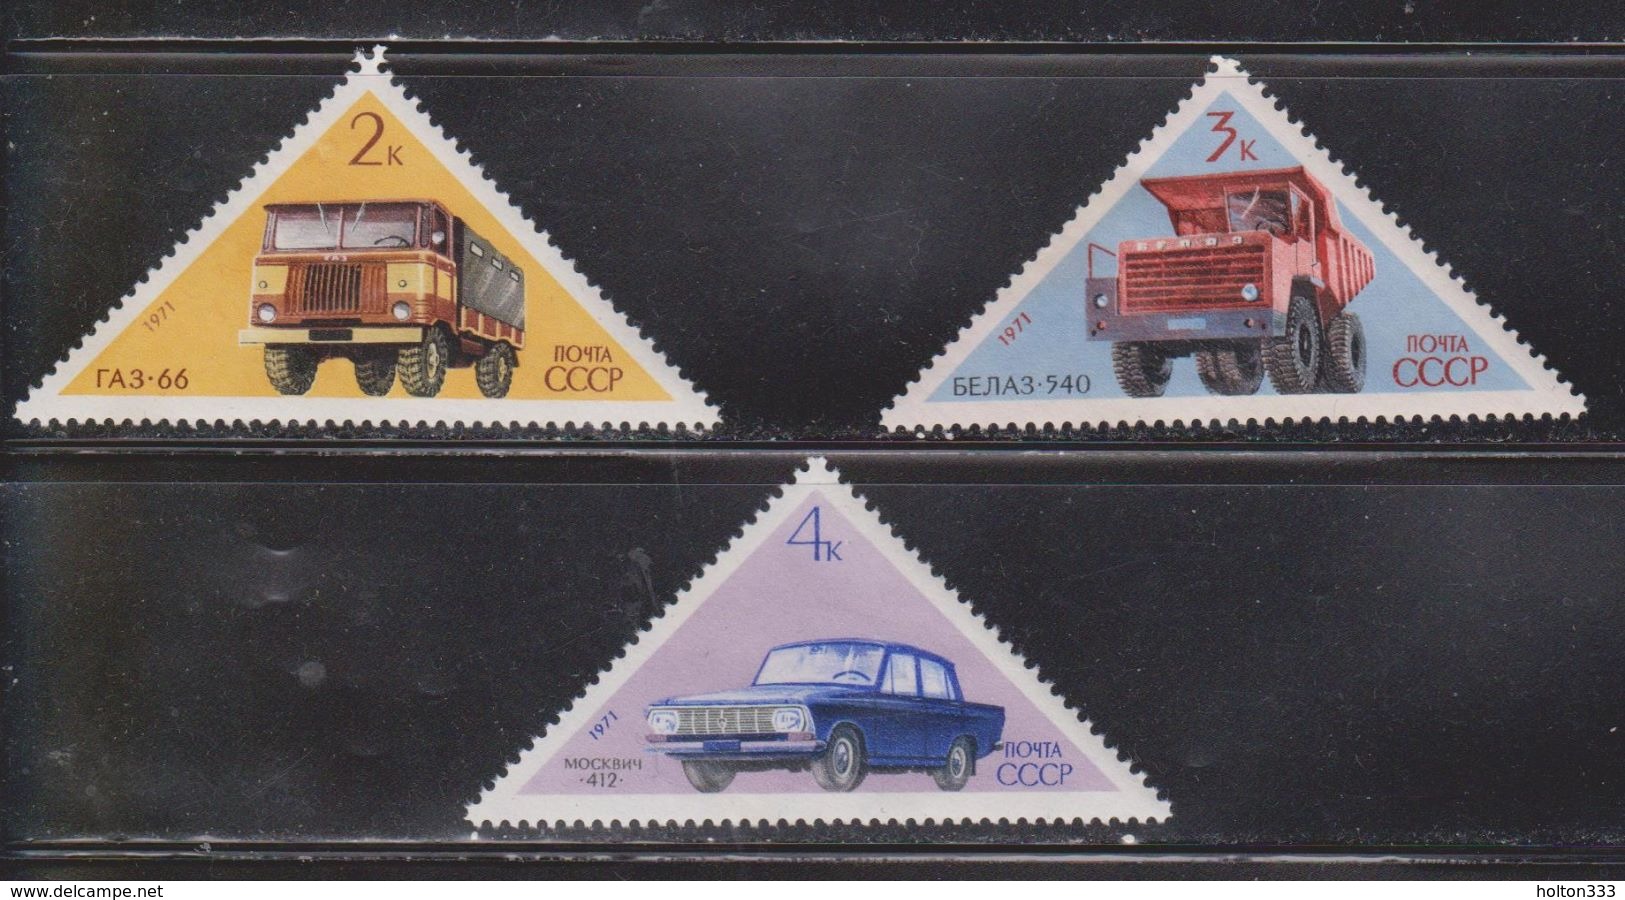 RUSSIA Scott # 3848-50 Mint Hinged - Russian Vehicles - Express Mail